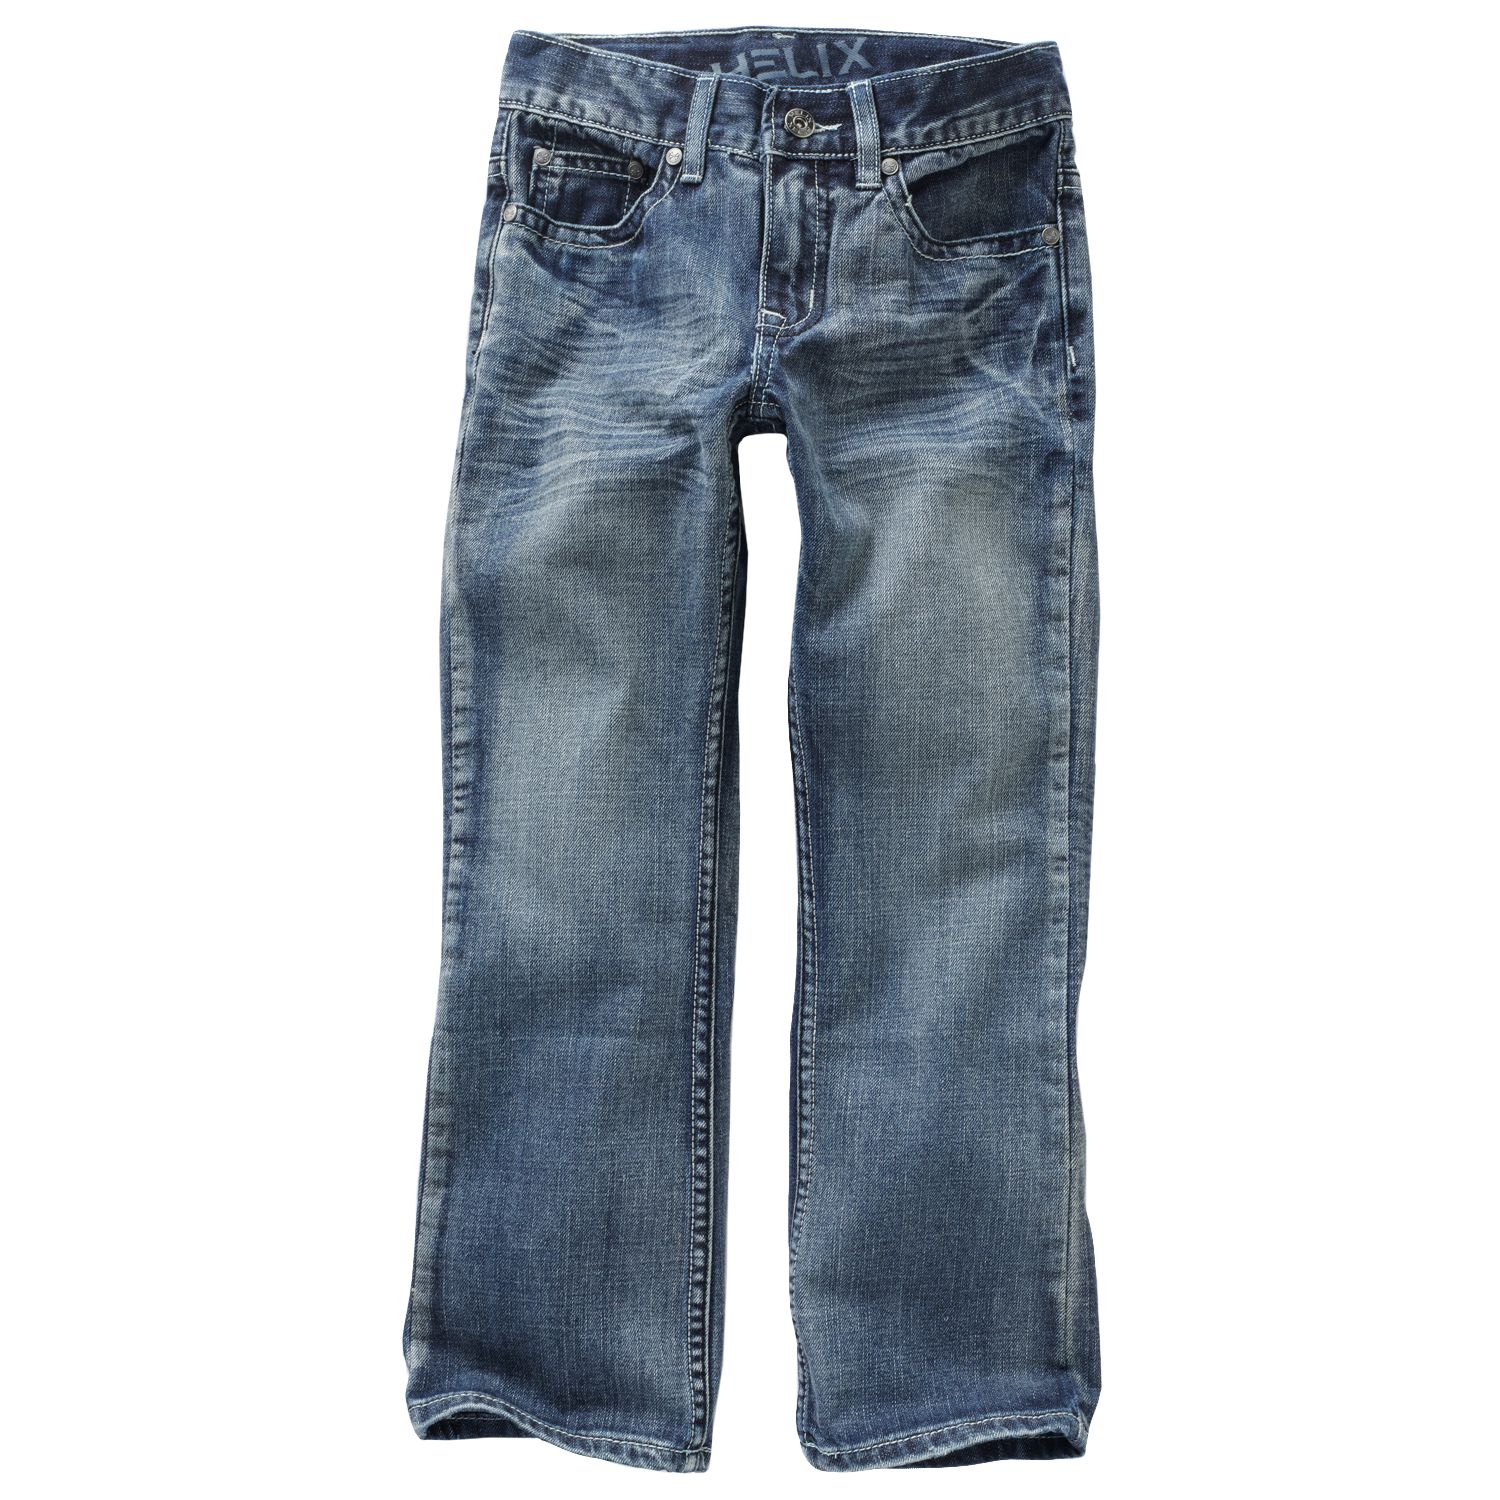 helix slim bootcut jeans